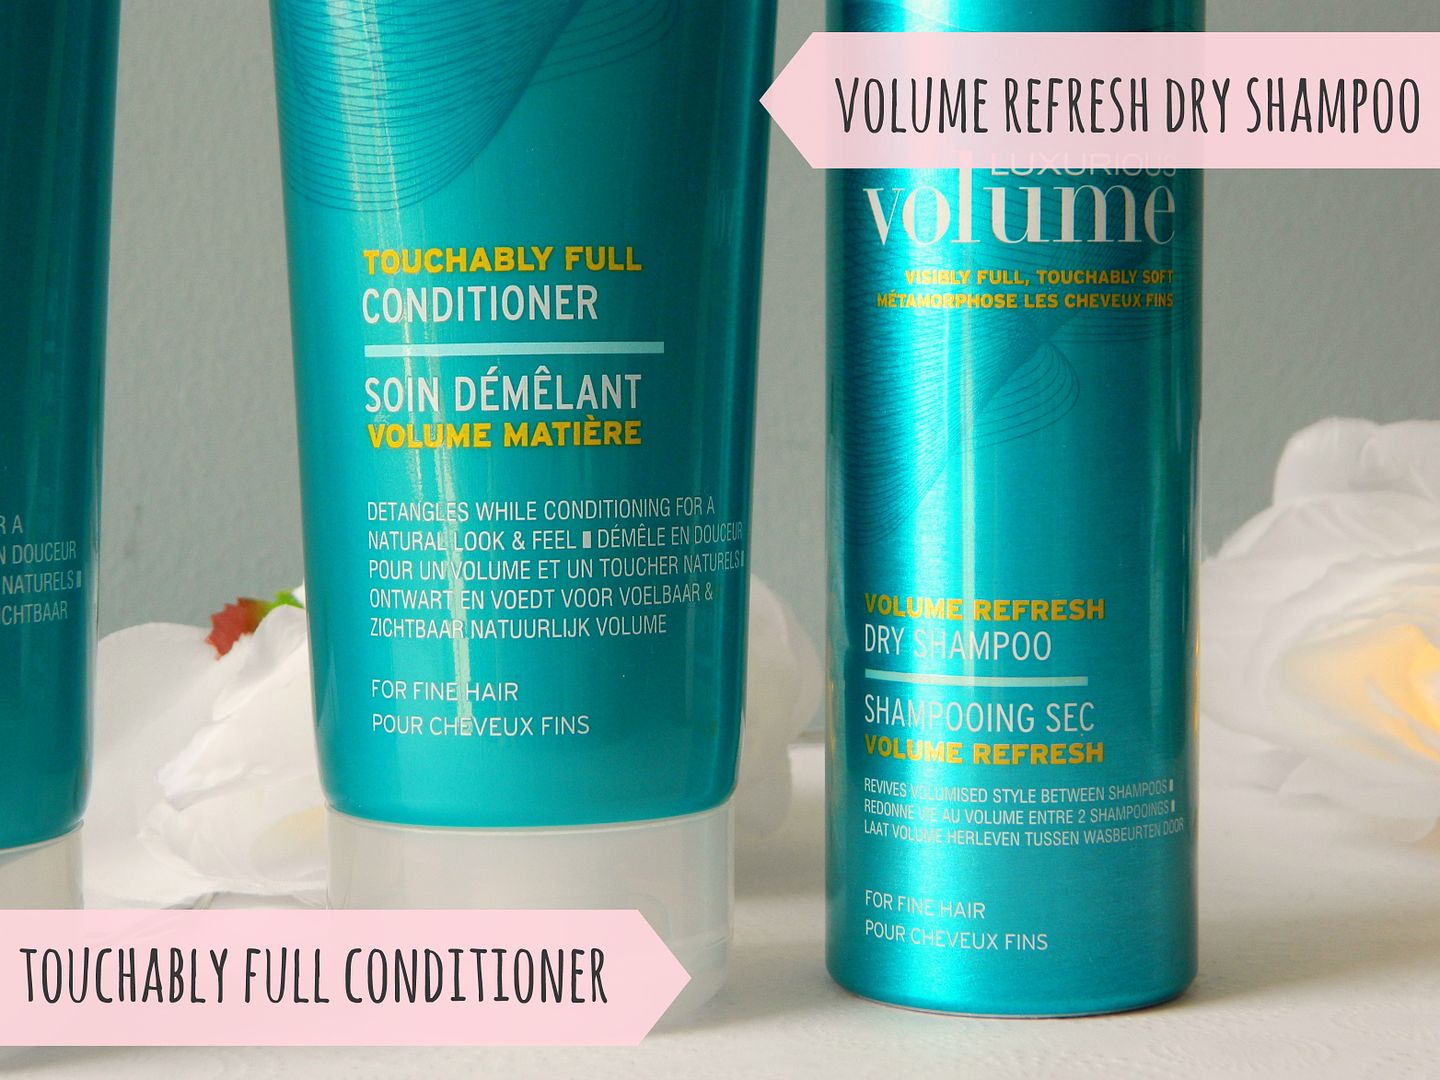 John Frieda Luxurious Volume Touchable Full Conditioner and Volume Refresh Dry Shampoo